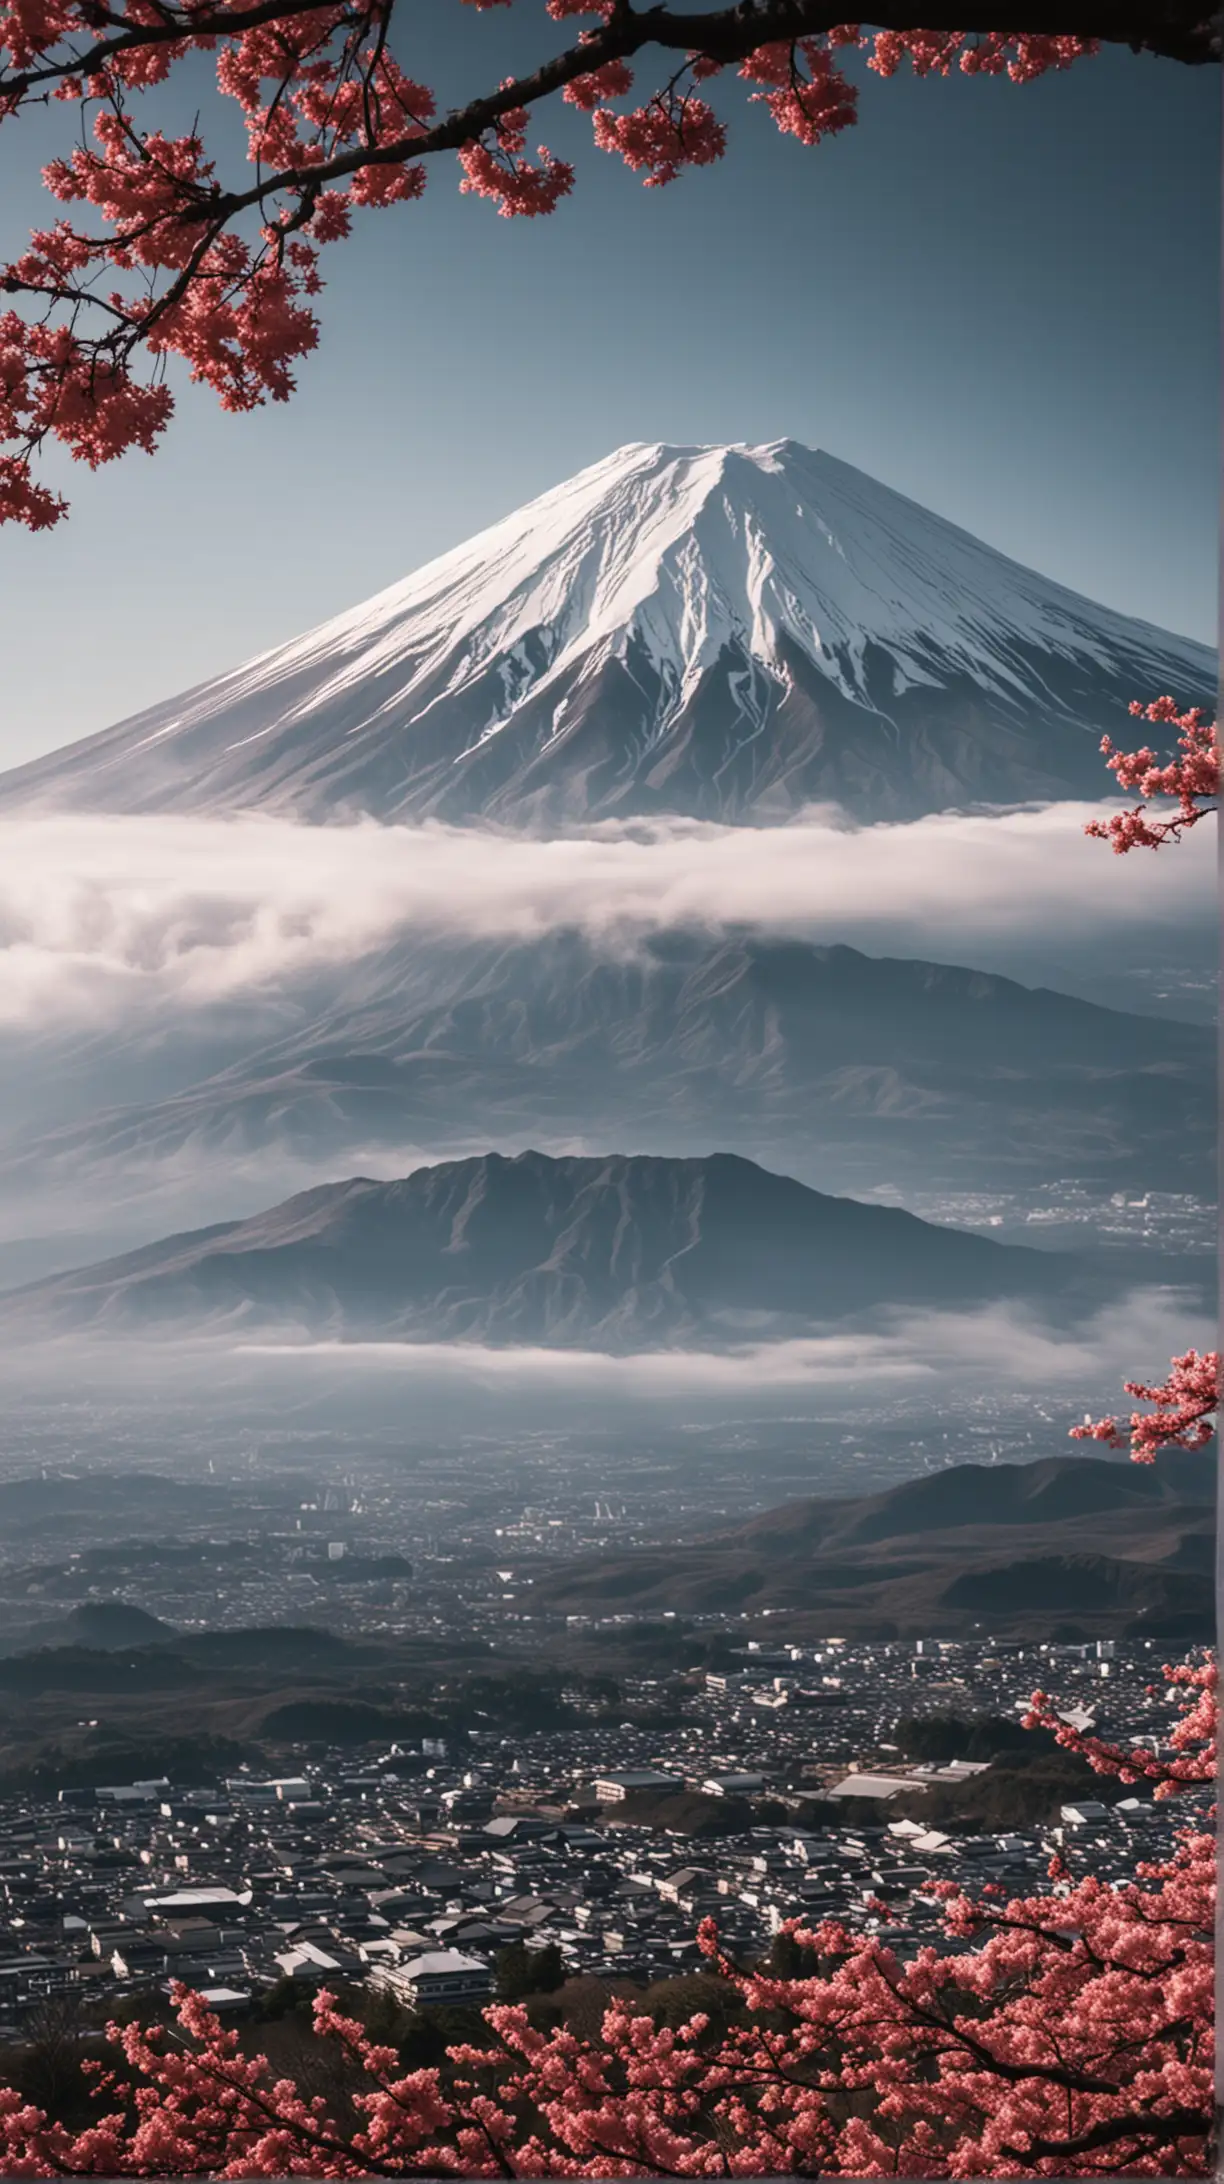 Majestic Mount Fuji in Japan Iconic Volcanic Peak Against Serene Landscape